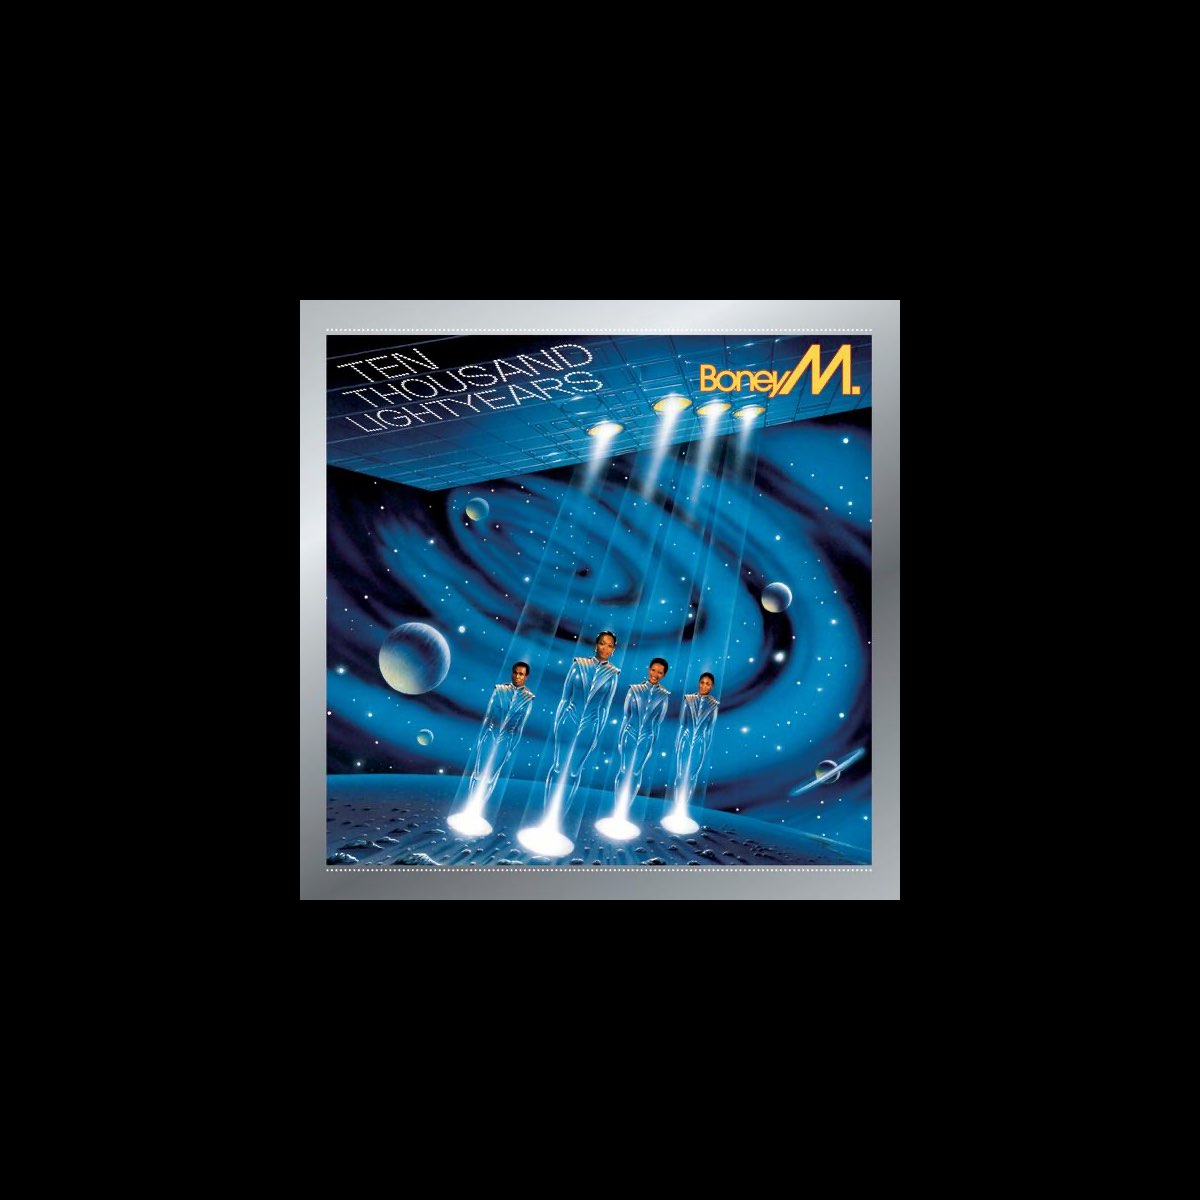 Ten Thousand Lightyears by Boney M. on Apple Music